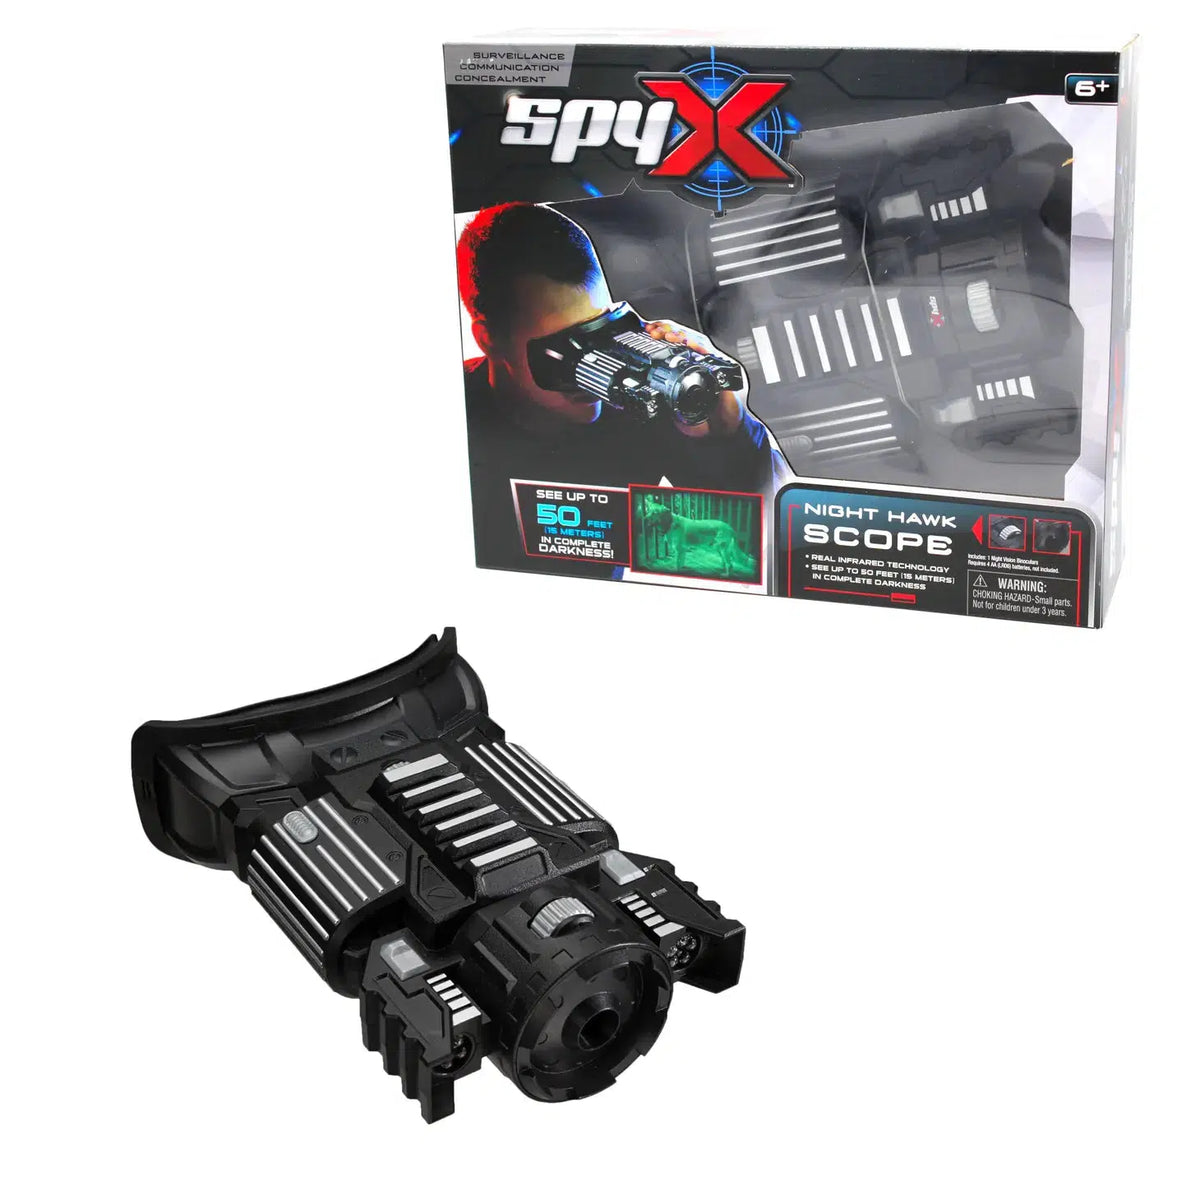 SpyX Night Hawk Scope - IR Infrared Night Vision Binocular